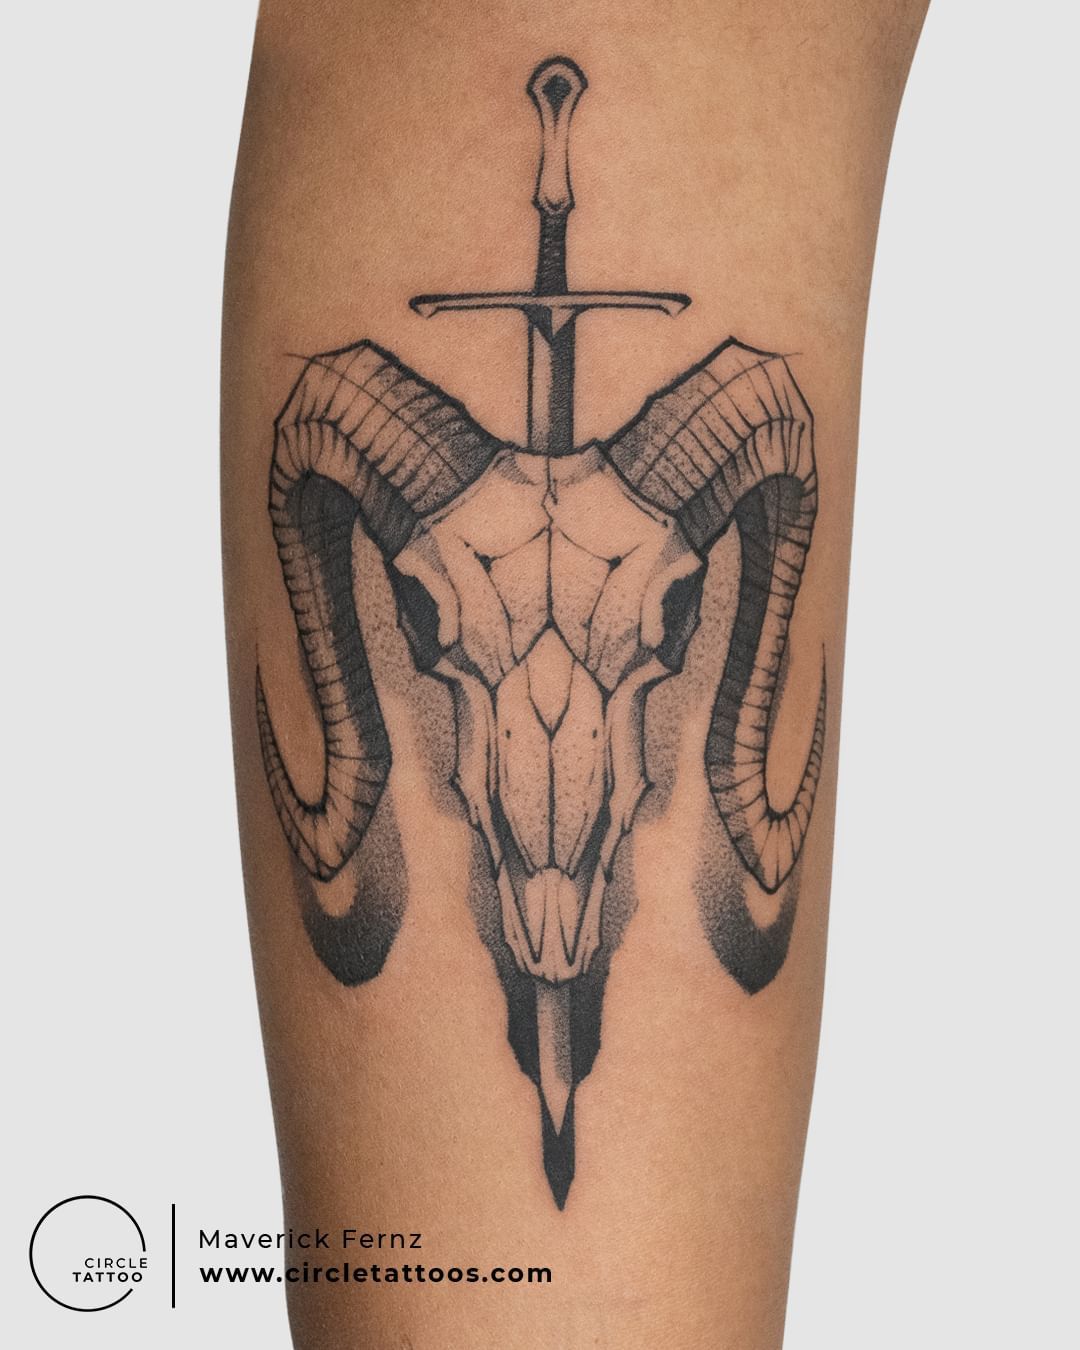 HCFL Tattoo : Tattoos : Animal : Ram Skull